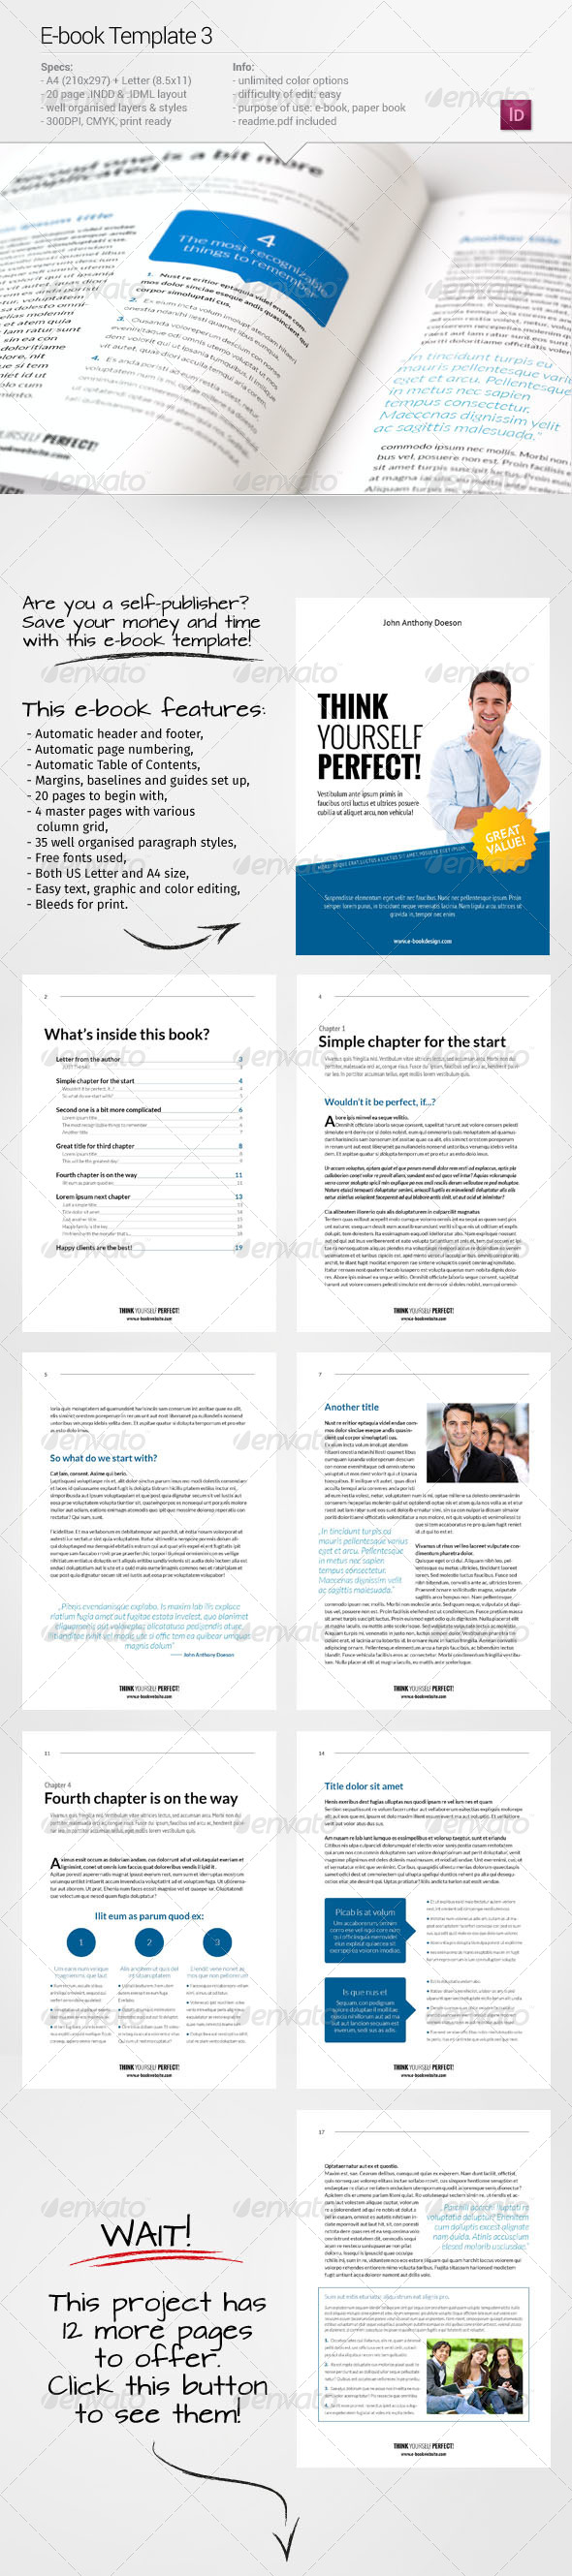 Graphics: A4 Ad Book Brochure Design Digital E-book Ebook Electronic Epub Graphic Ipad Kindle Magazine Print Ready Publishing Tablet Template